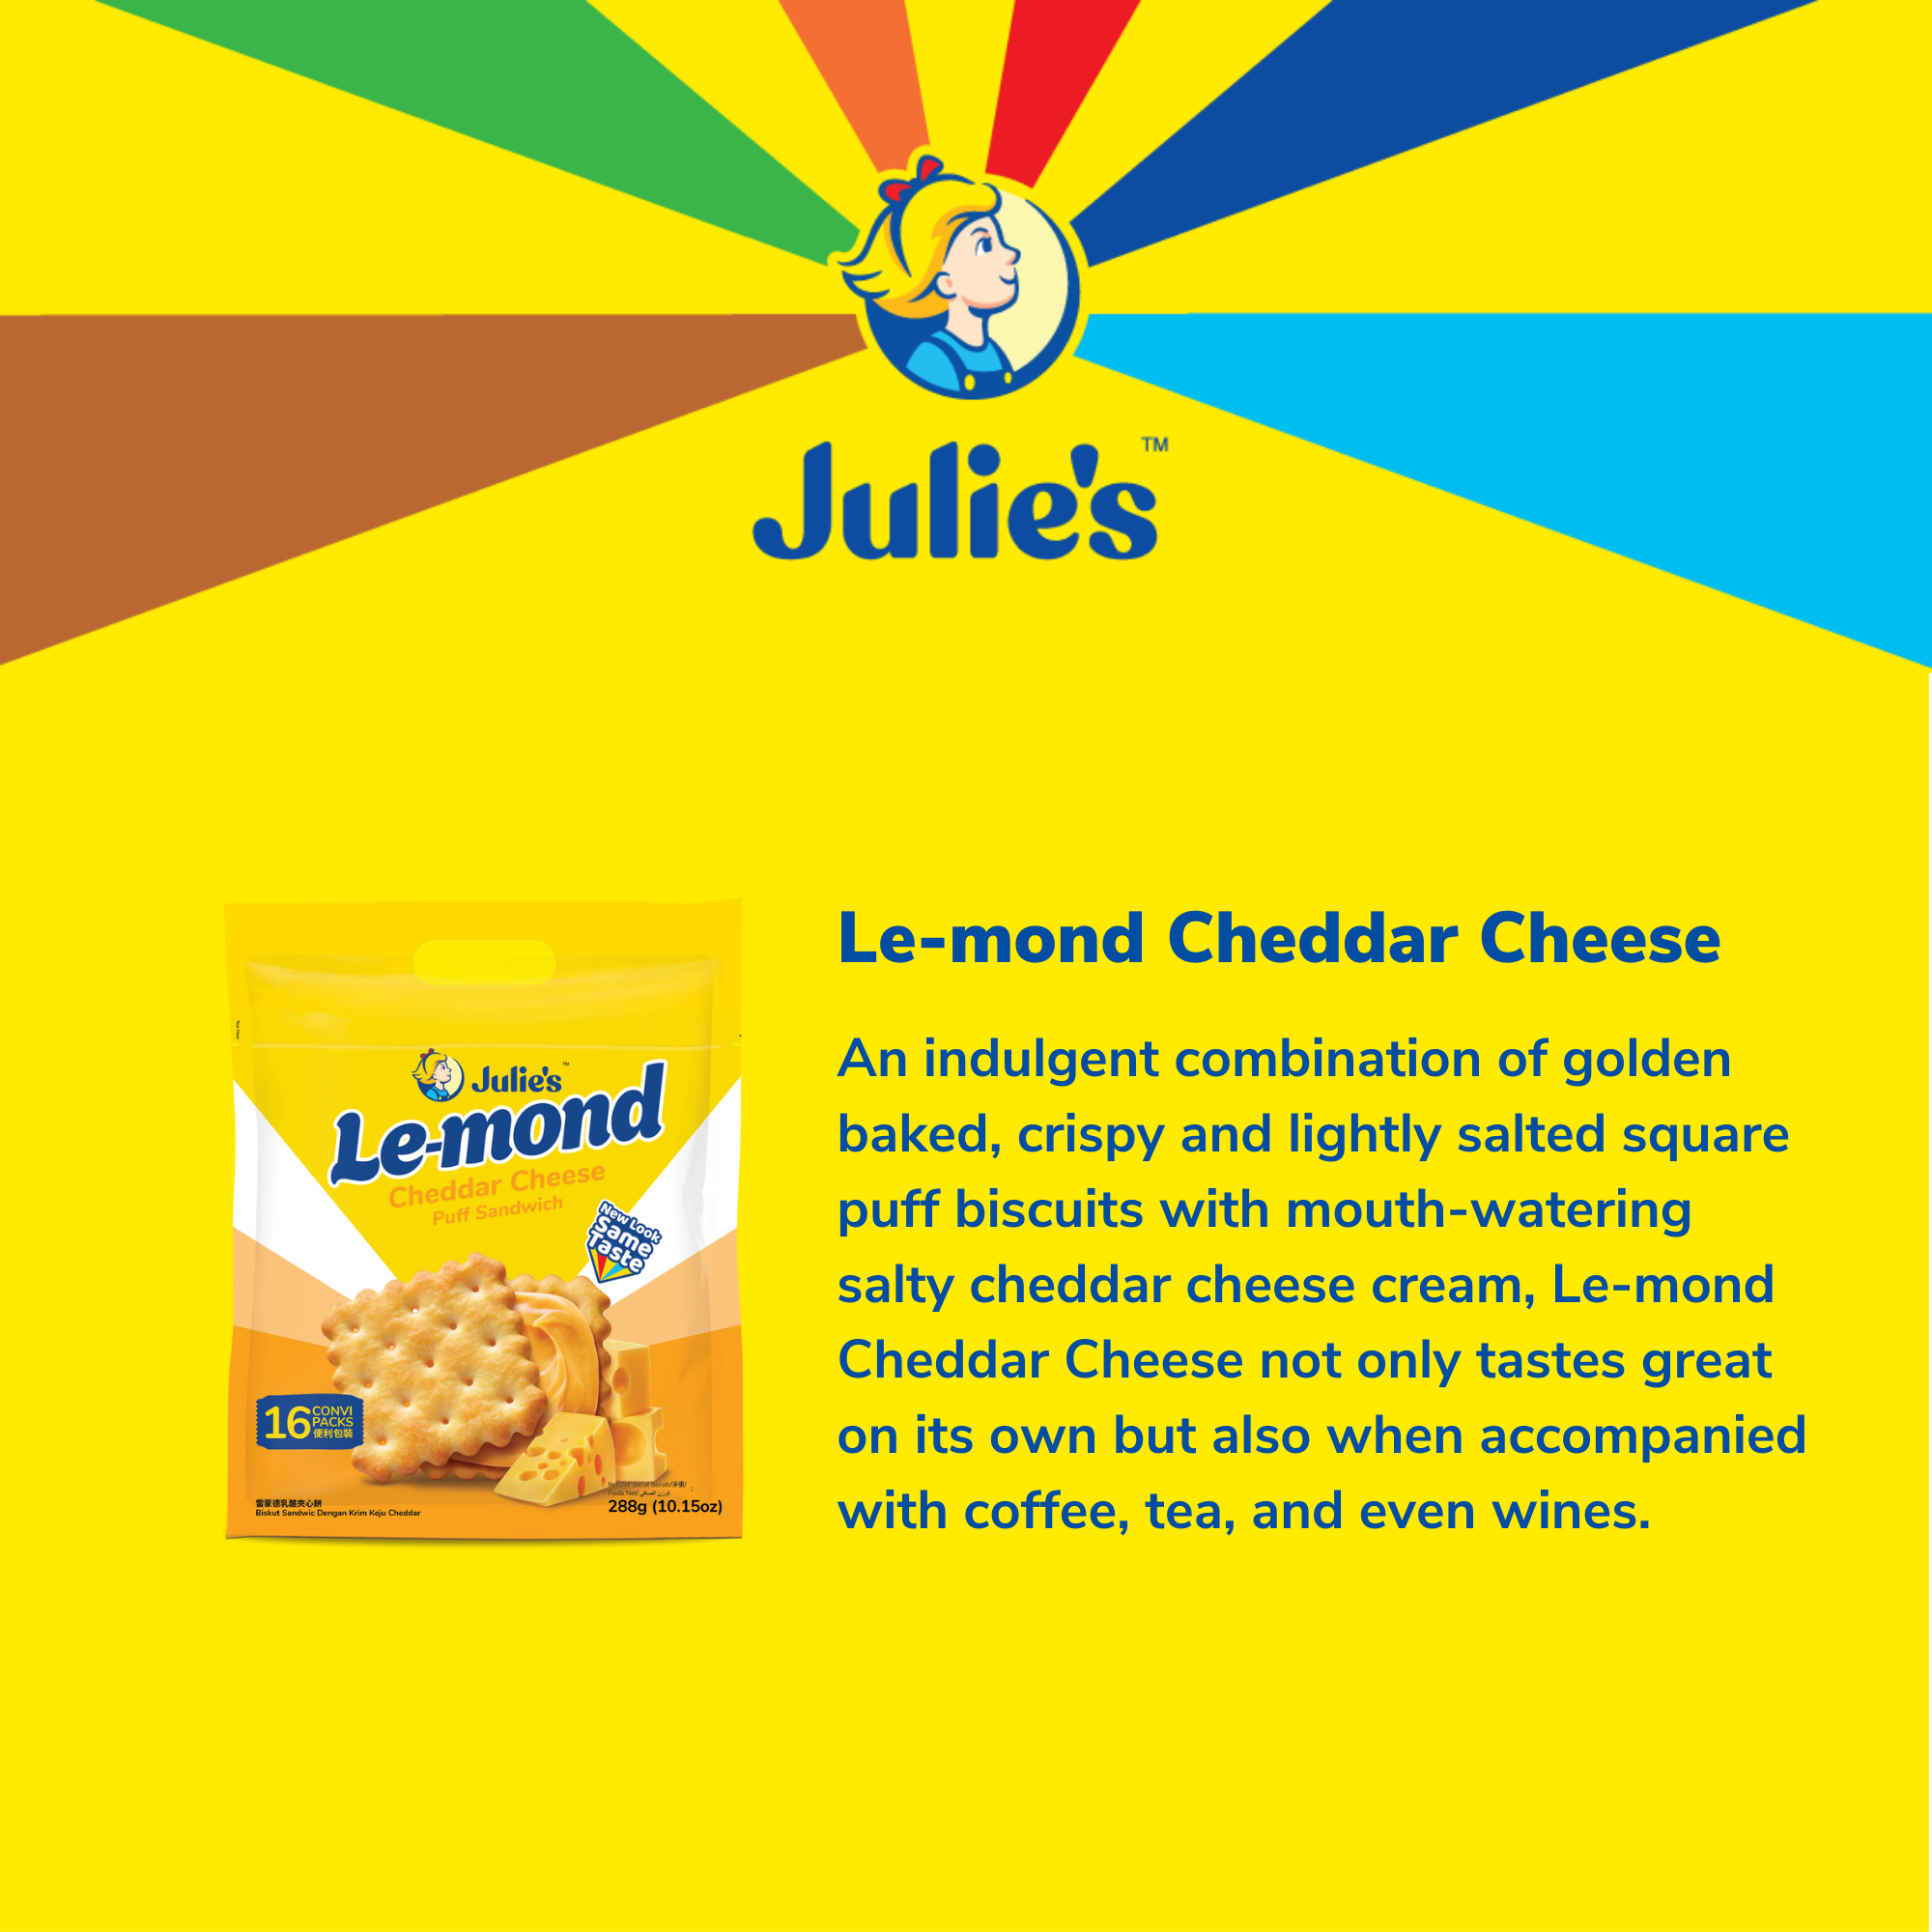 Julie's Le-mond Cheddar Cheese Puff Sandwich 288g x 1 pack